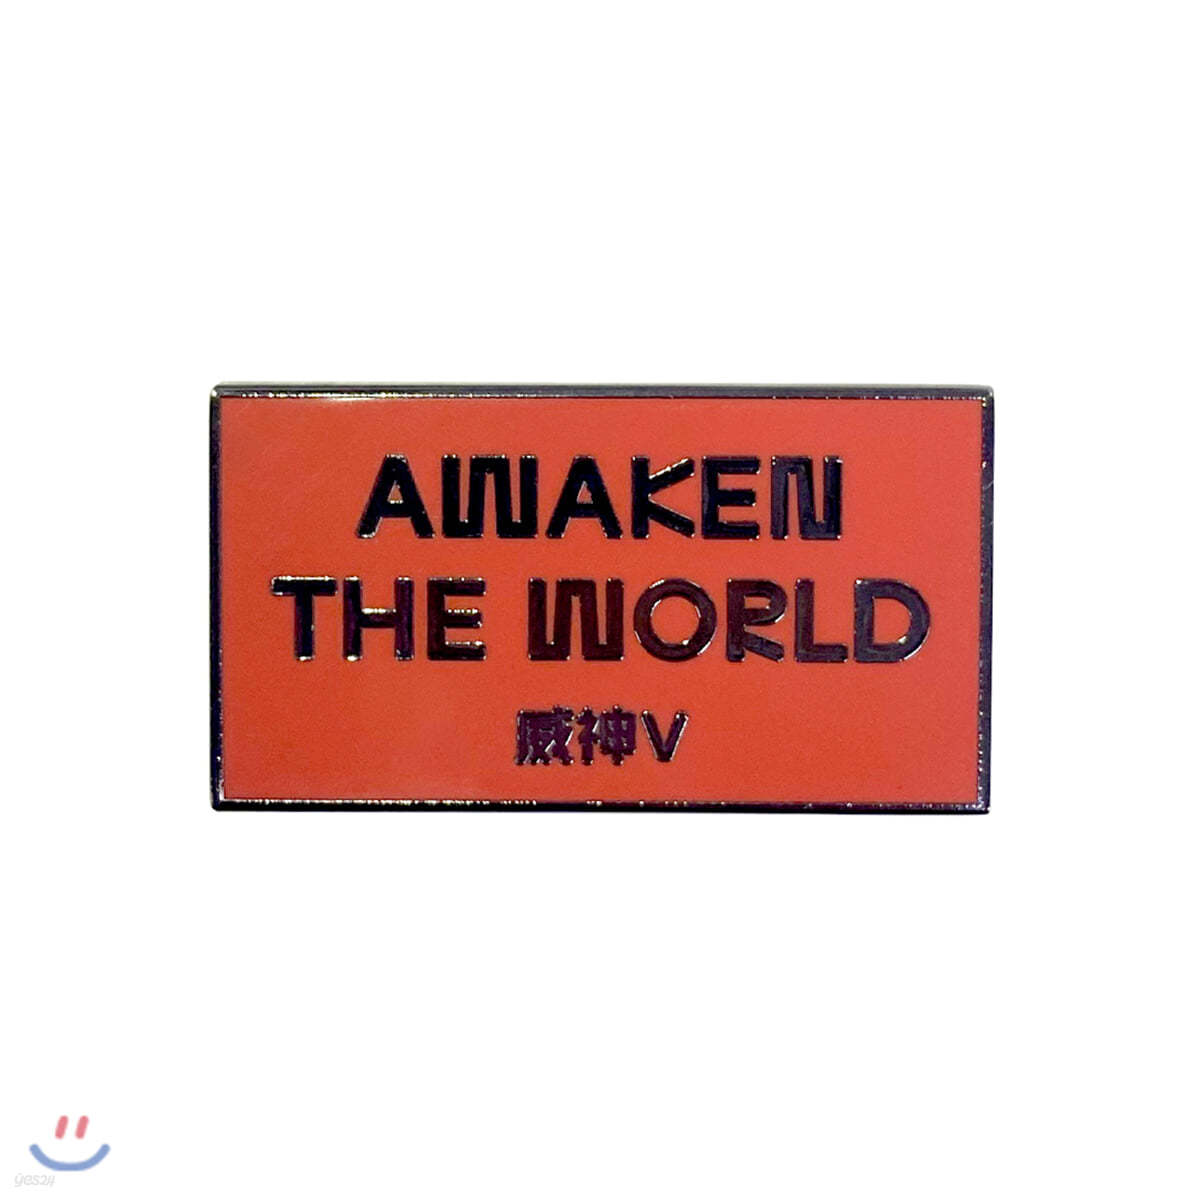 WayV - Awaken the world BADGE [A]